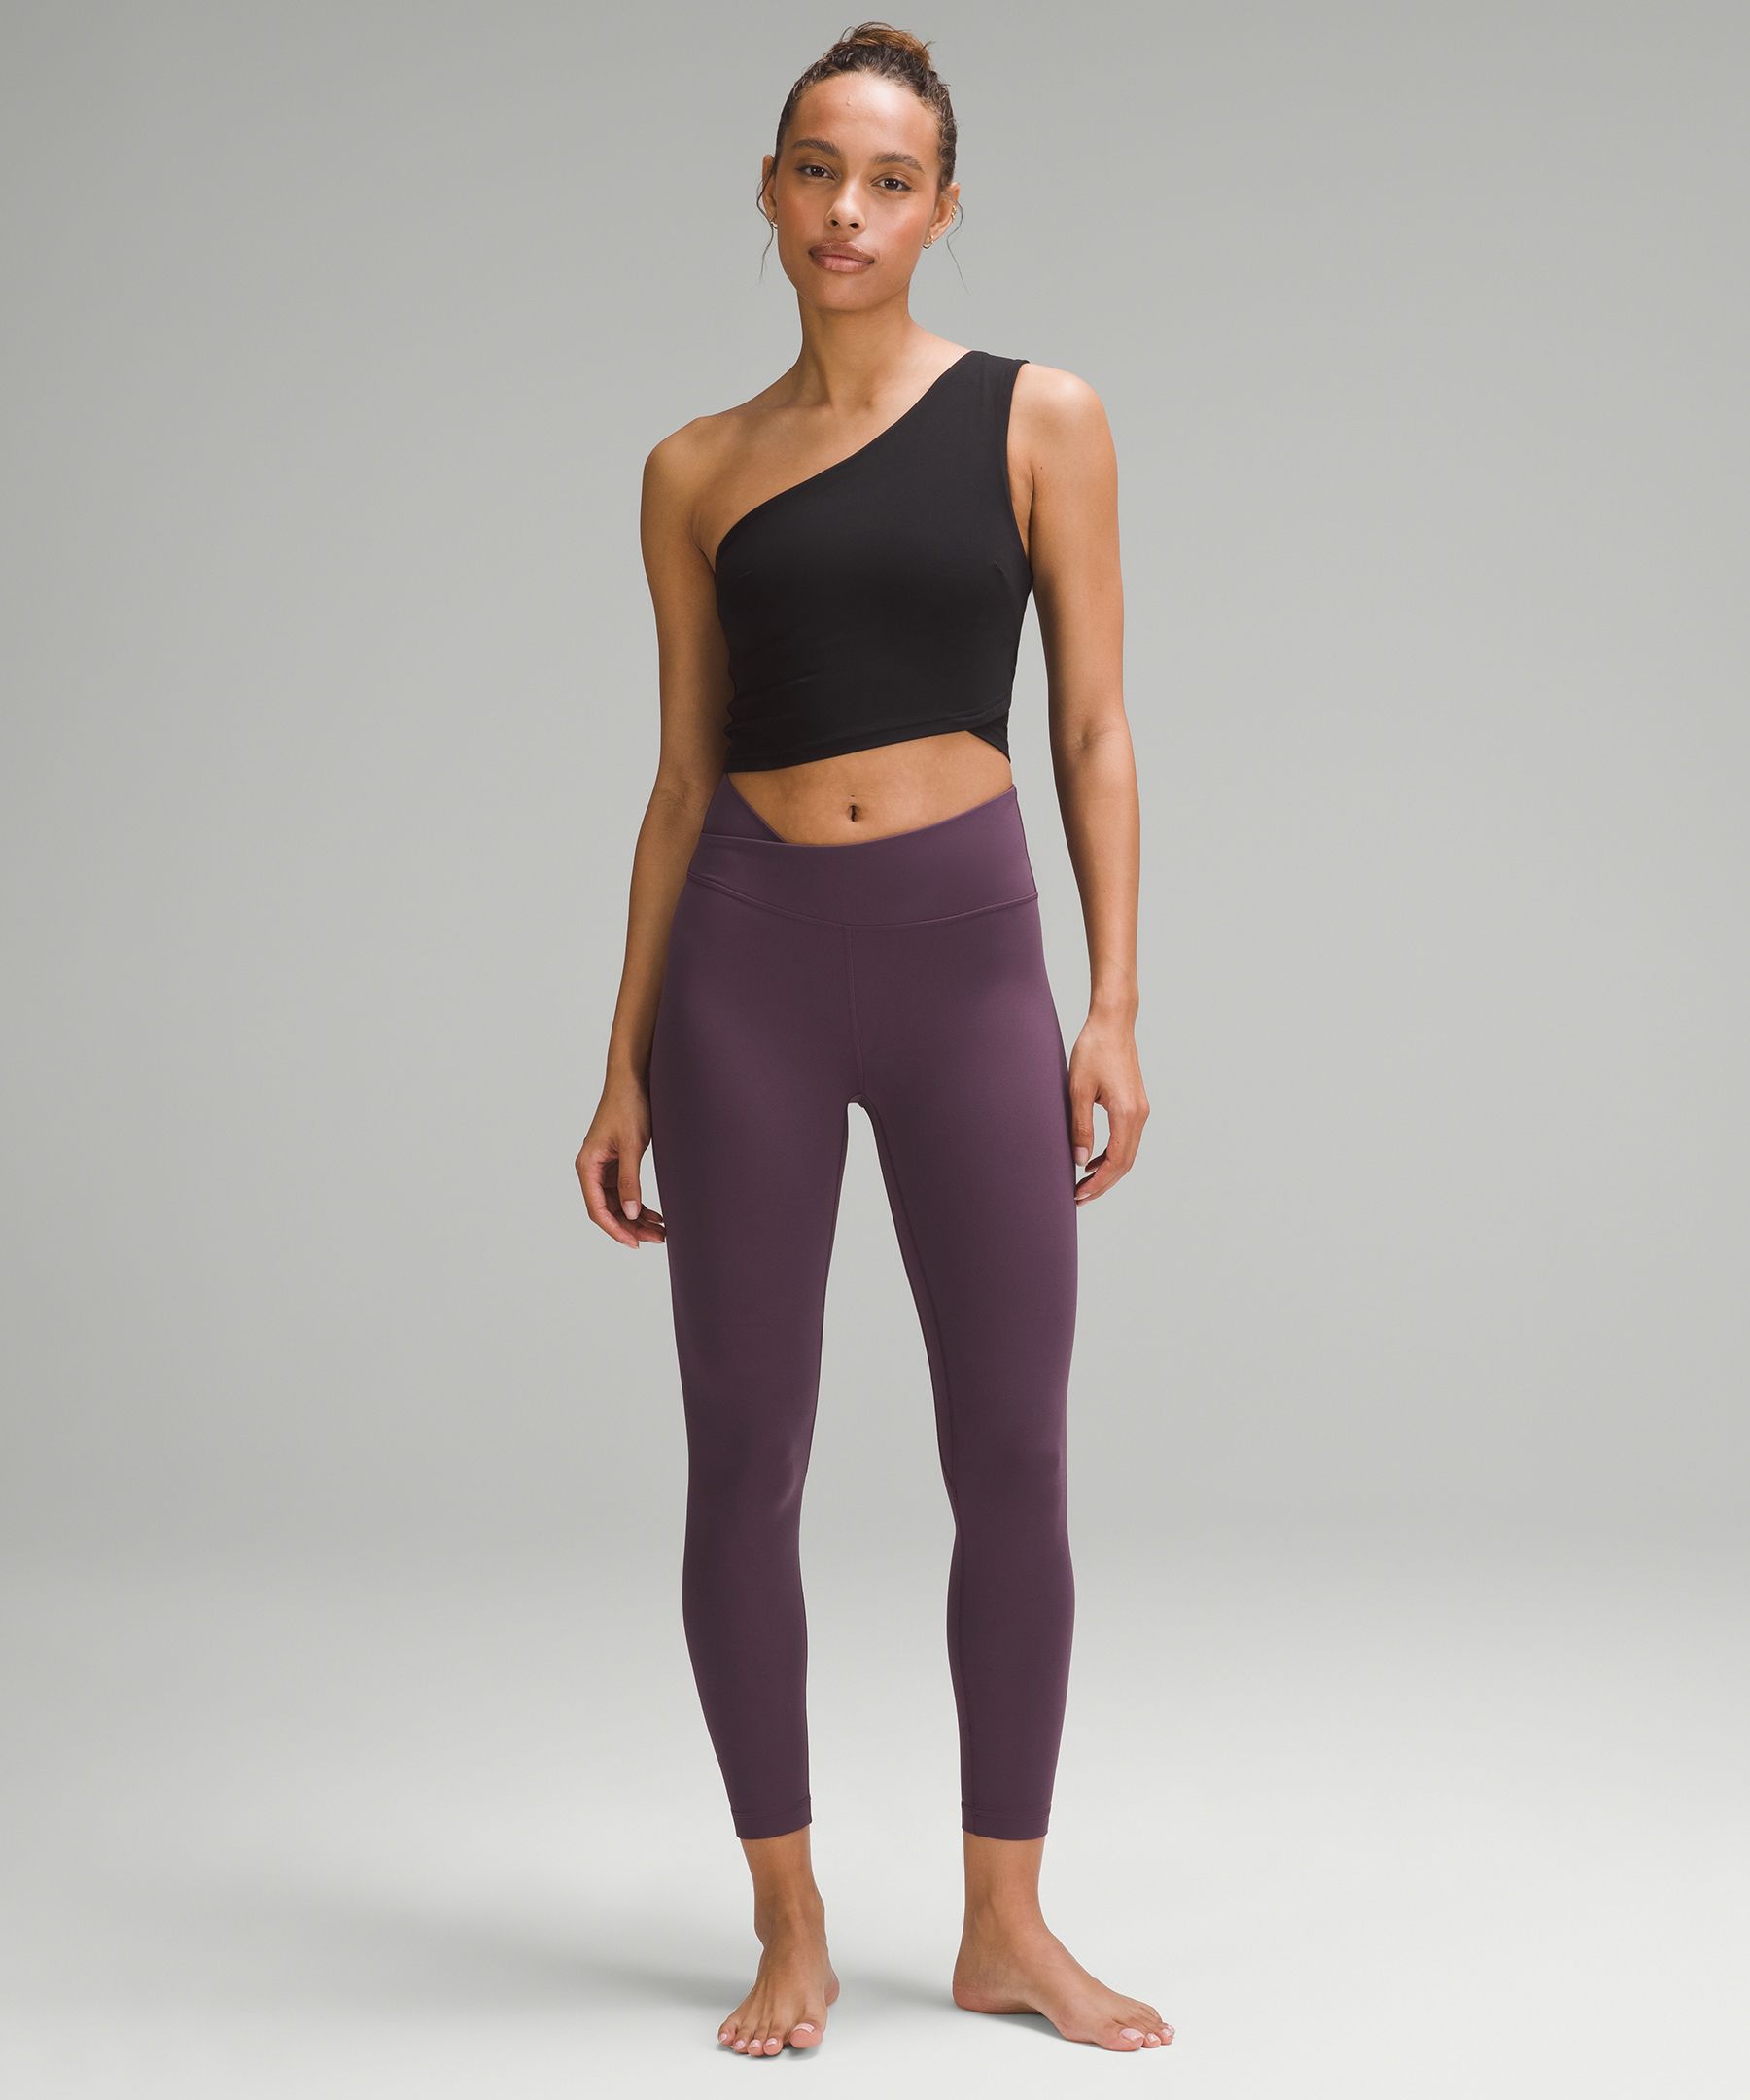 Lululemon Purple Black Stripe Pace Queen Leggings 6 Shorter Inseam - $32 -  From Kimberly